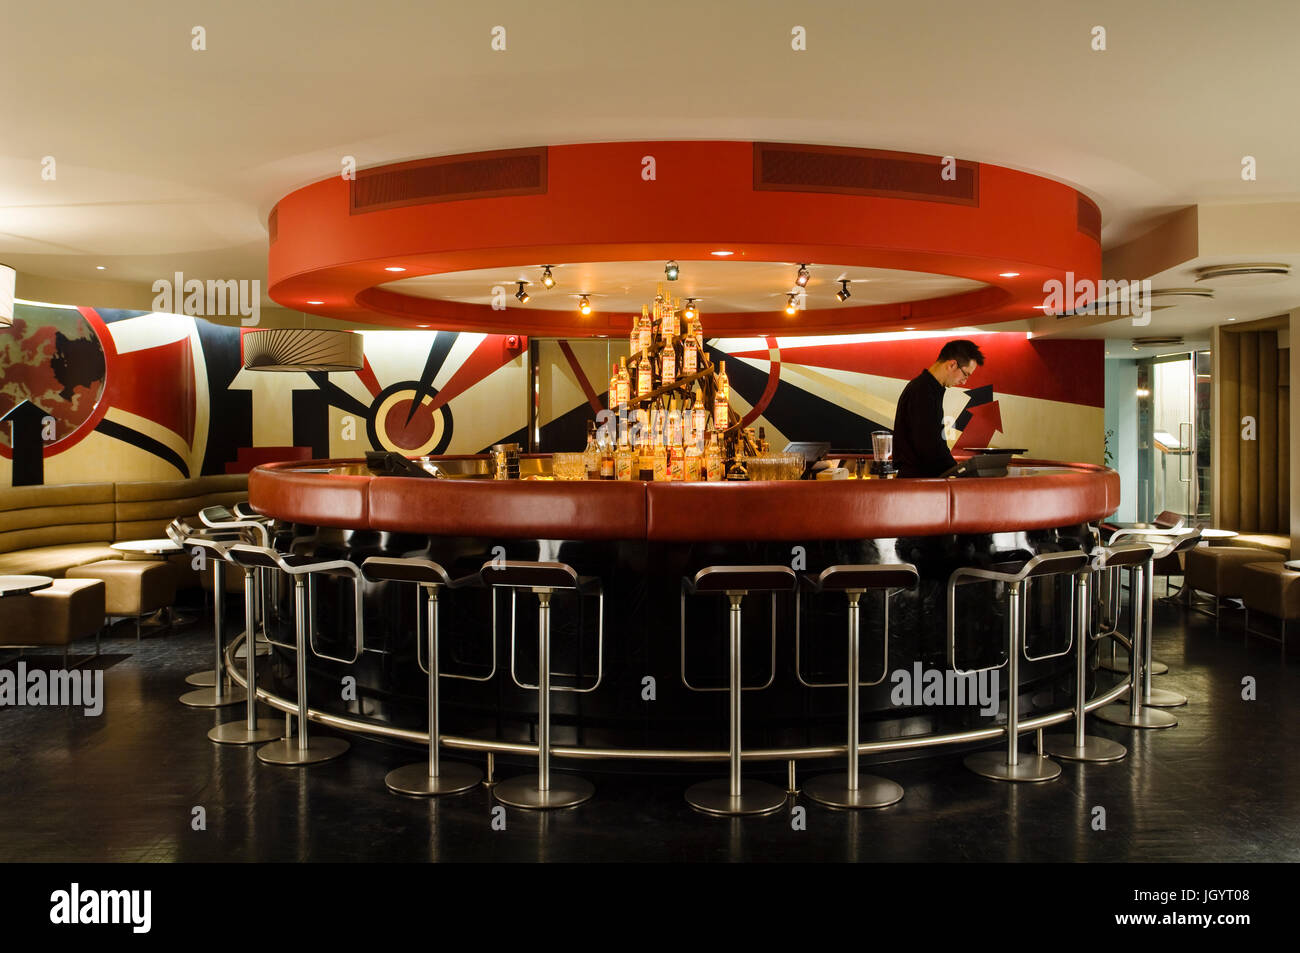 Circular red bar with black stools Stock Photo